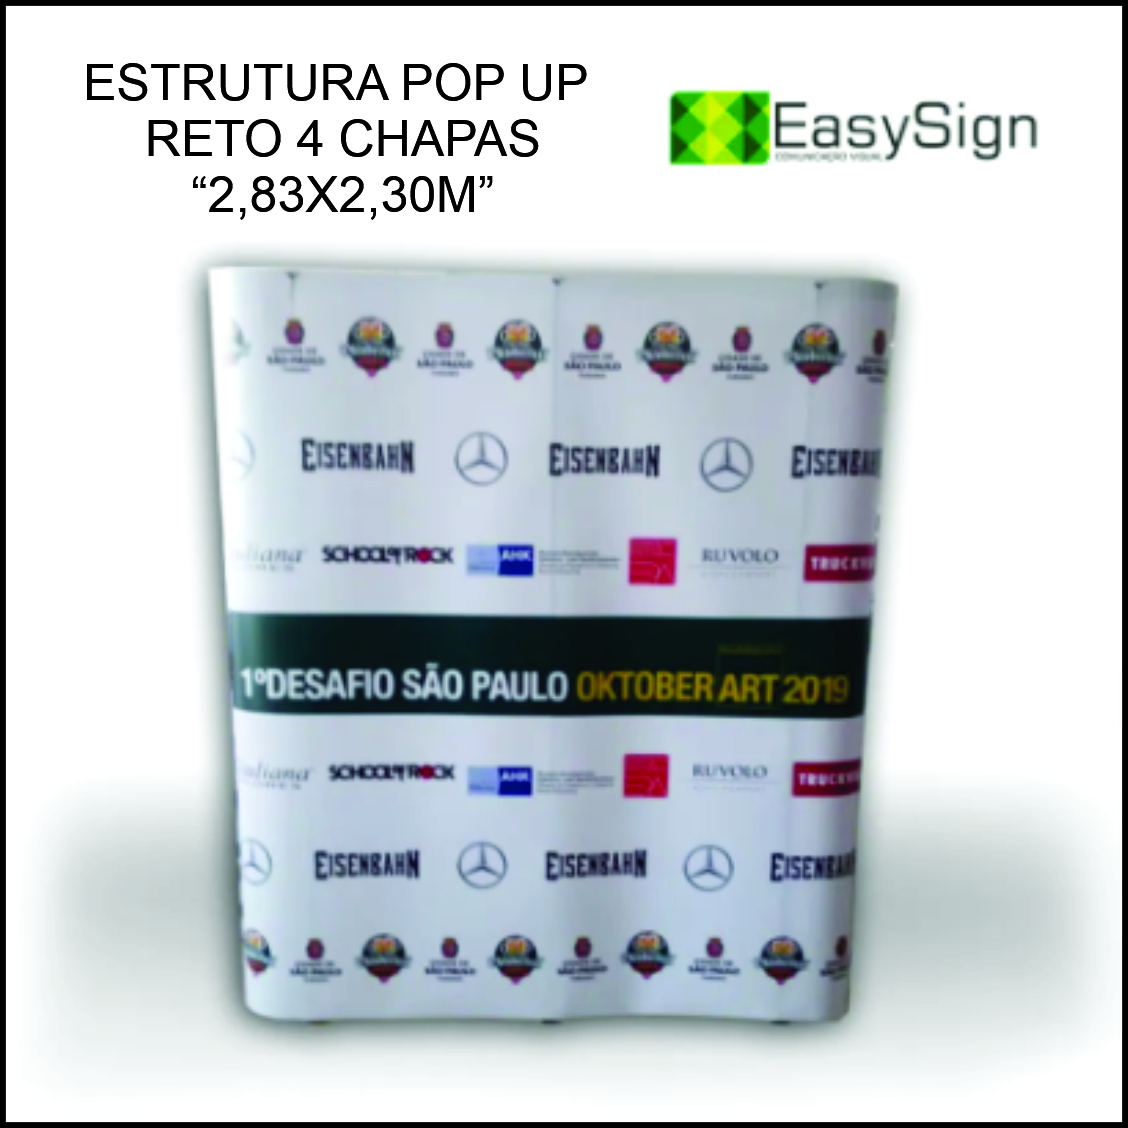 ESTRUTURA POP UP RETO 4 CHAPAS “2,83X2,30M”